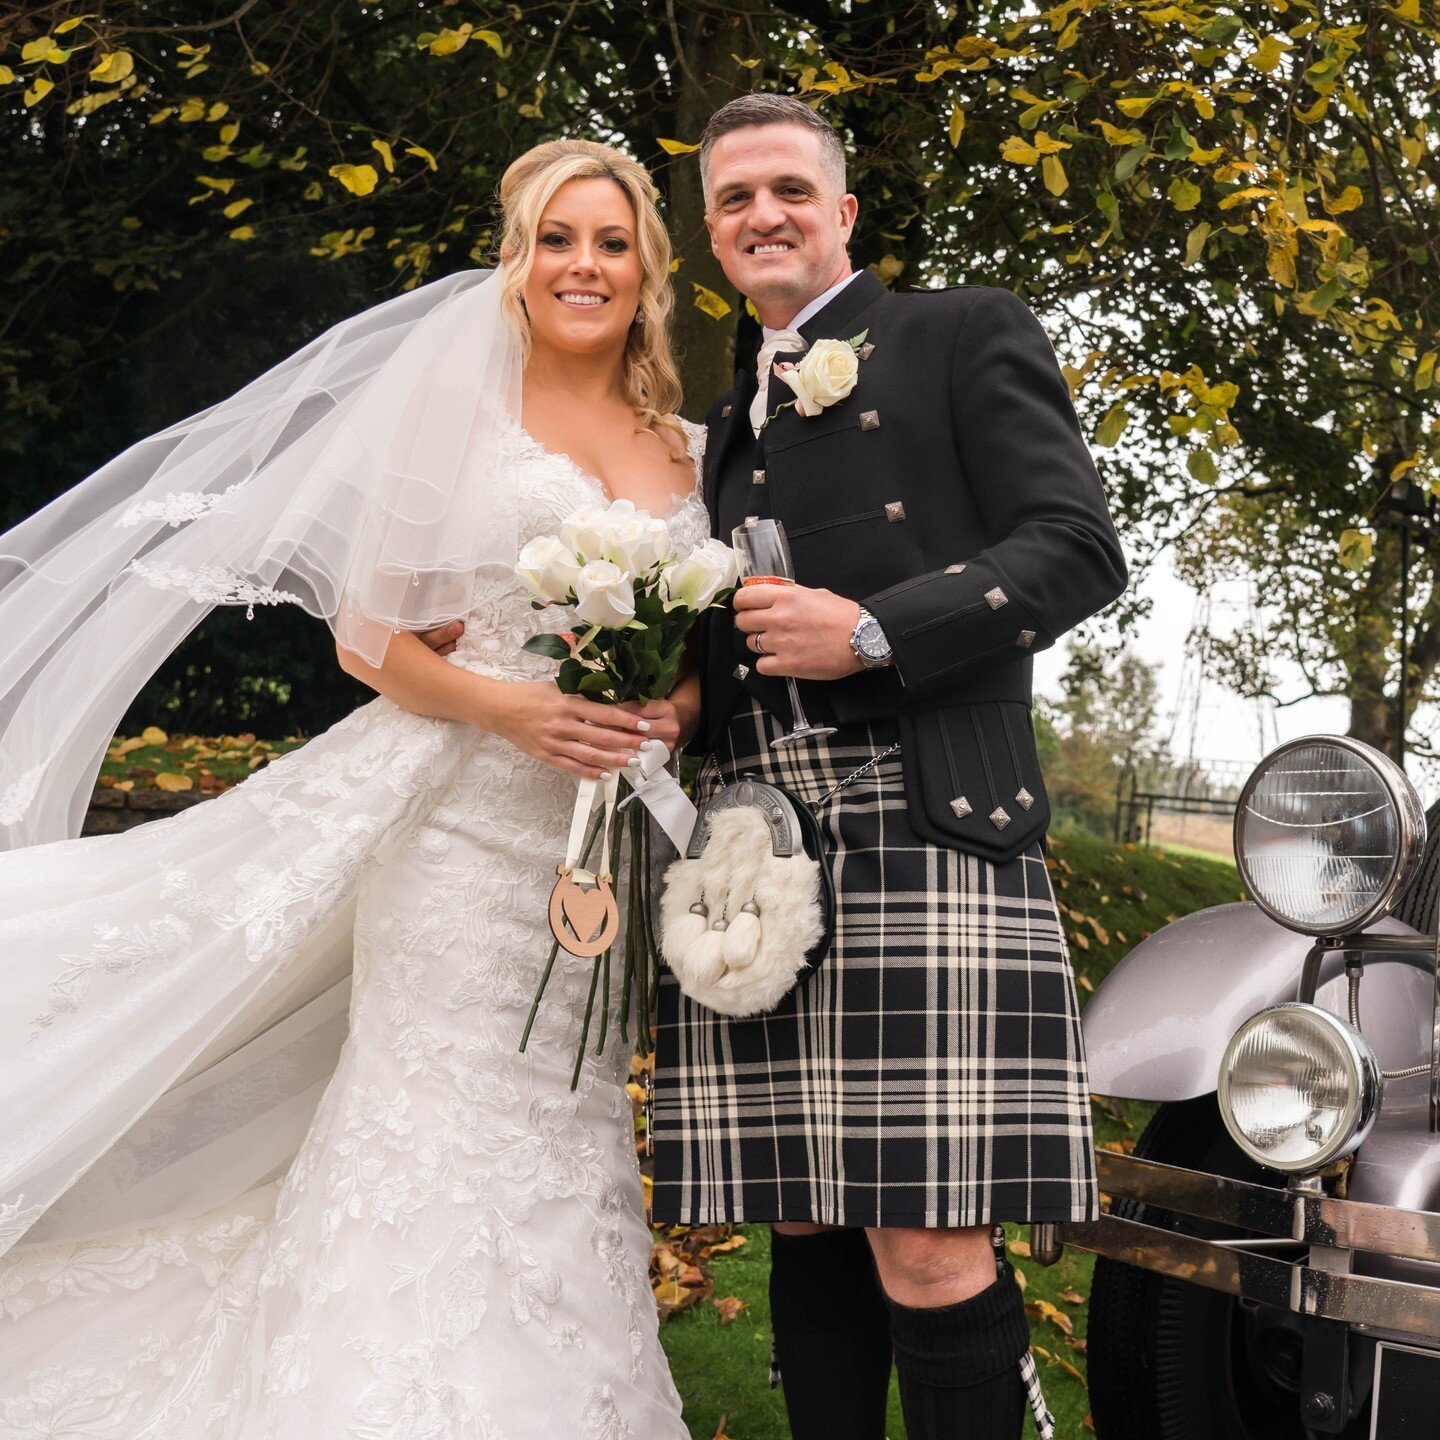 Loved this autumn wedding, great couple and wonderful vibrant seasonal colours #weddingplan #lochlomond #lochlomondphotographer #lochlomondphotography #glasgowphotographer #glasgowweddings #scotlandweddingphotographer #scotlandelopments